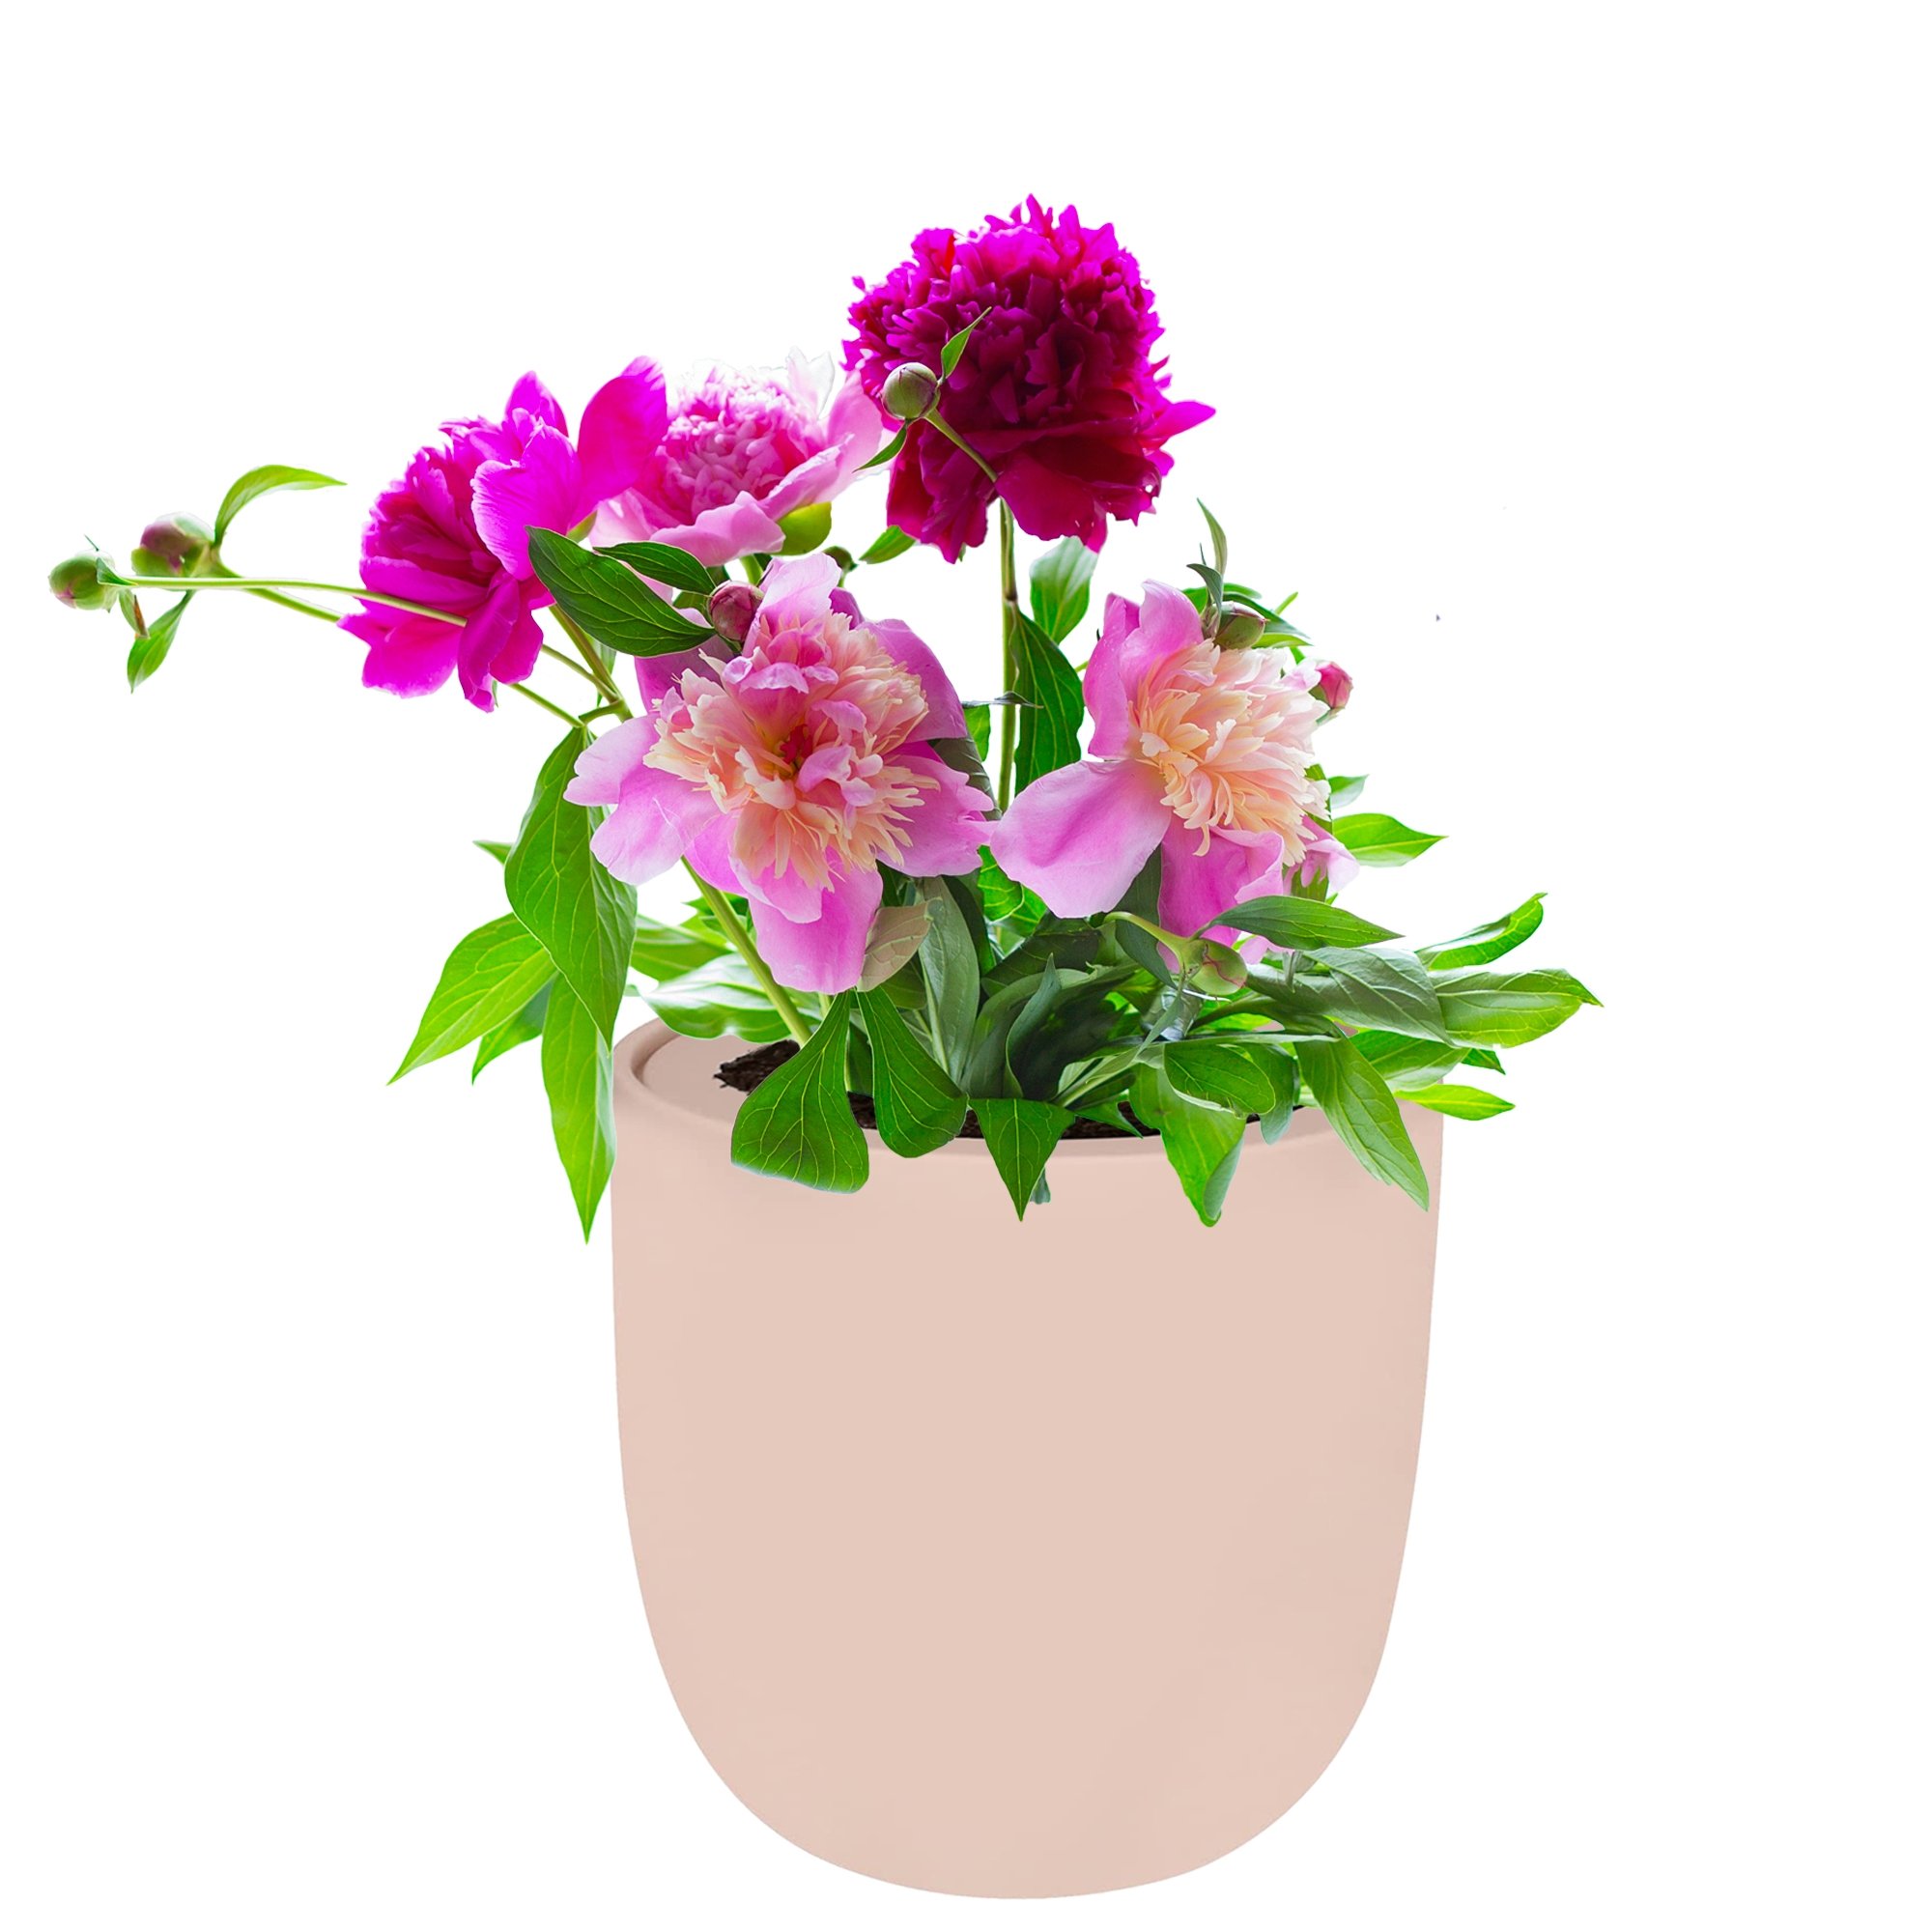 Zinnia Thumbelina Pink Ceramic Pot Hydroponic Growing Kit with Seeds